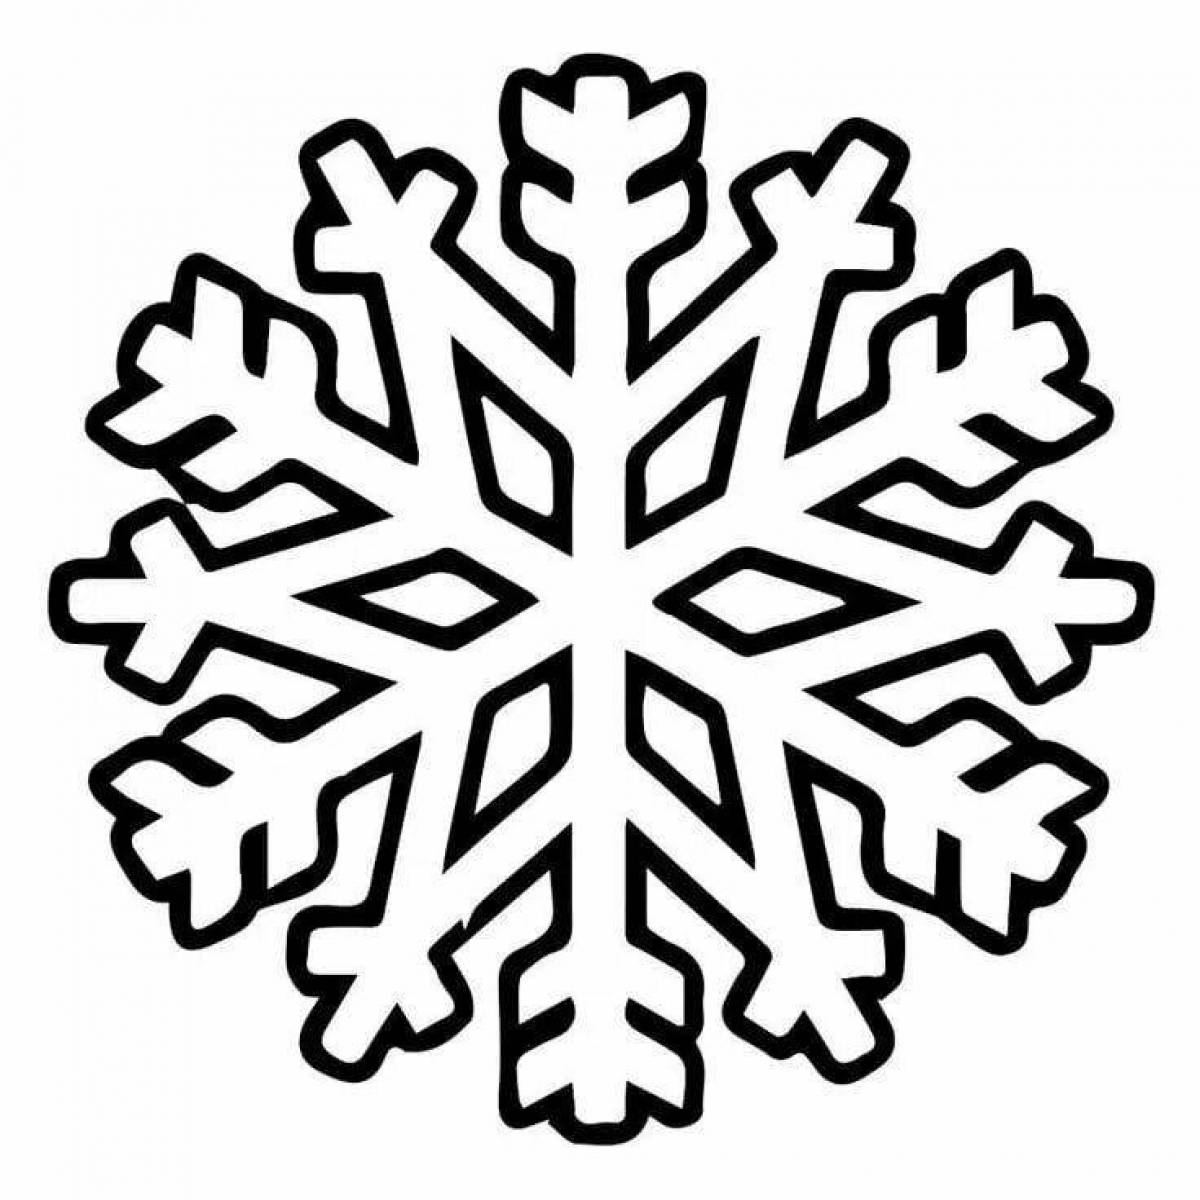 Exquisite snowflake coloring